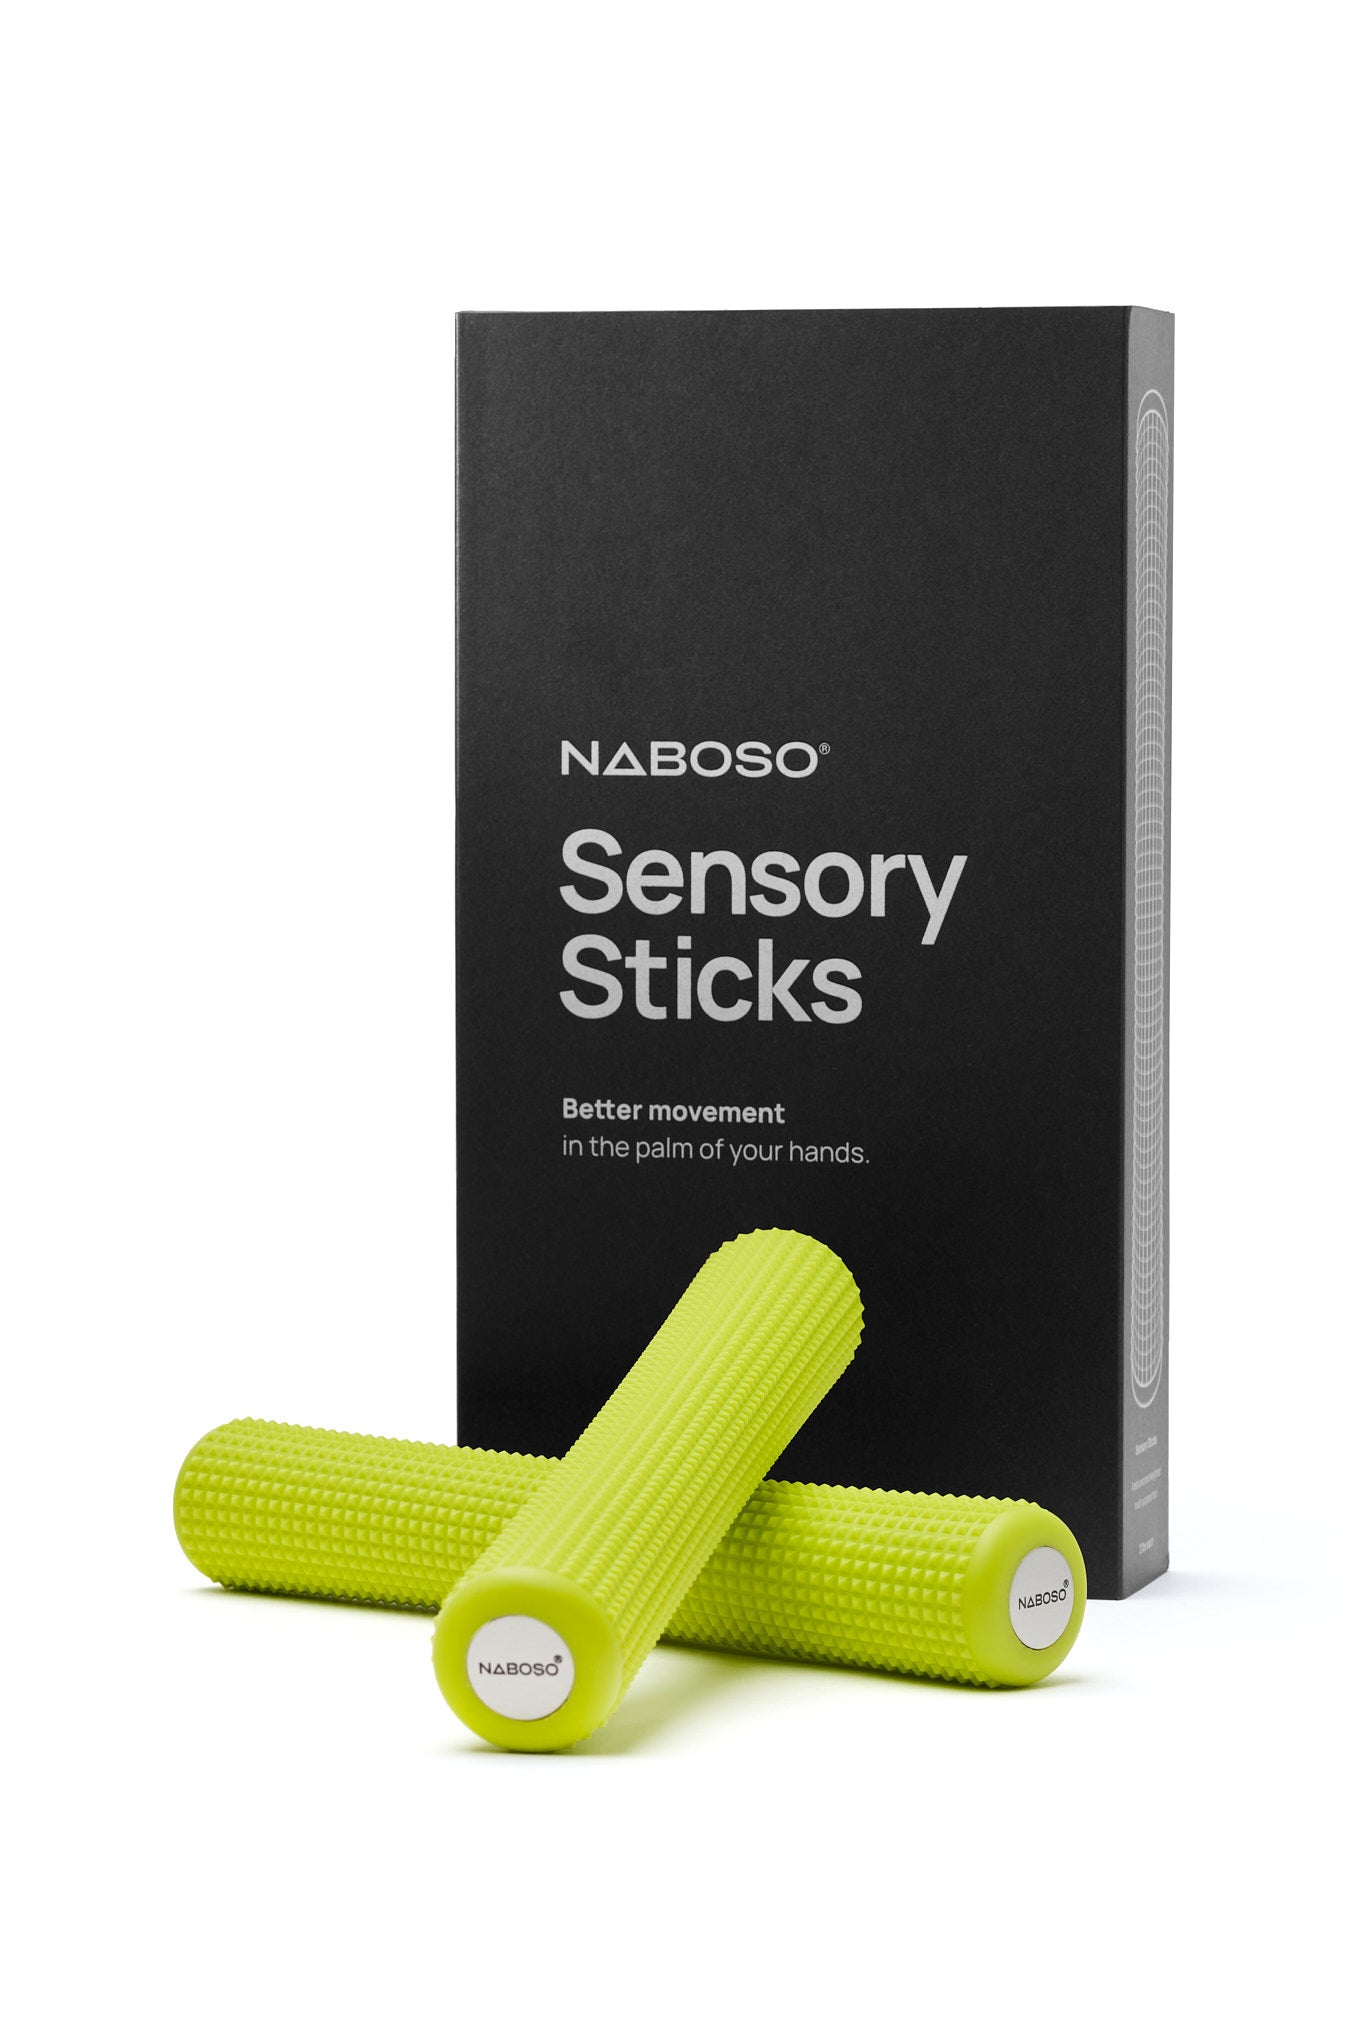 Naboso Sensory Sticks